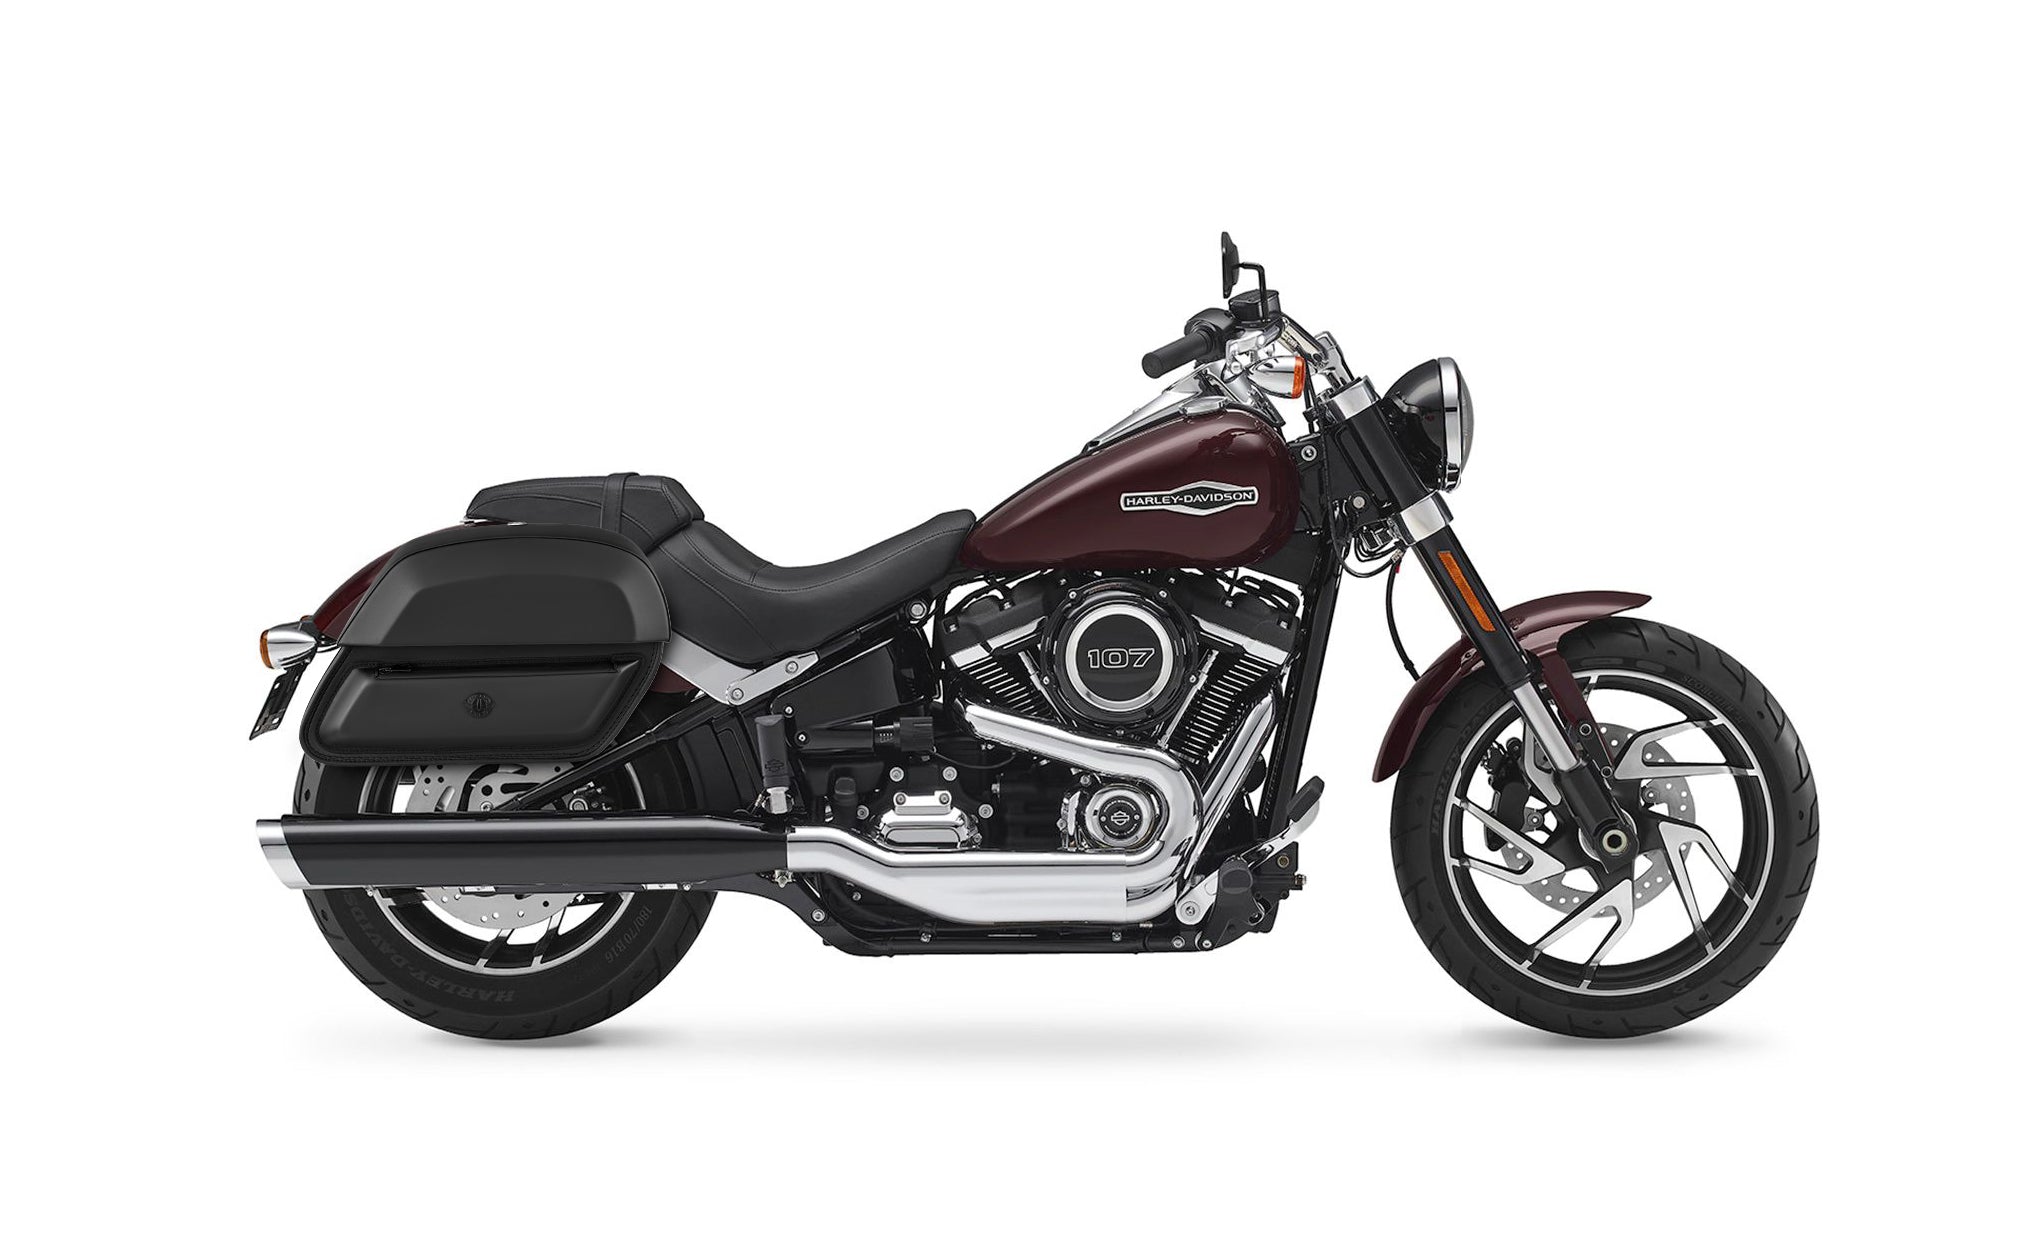 28L - Wraith Medium Leather Saddlebags for Harley Softail Sport Glide FLSB BAG on Bike View @expand